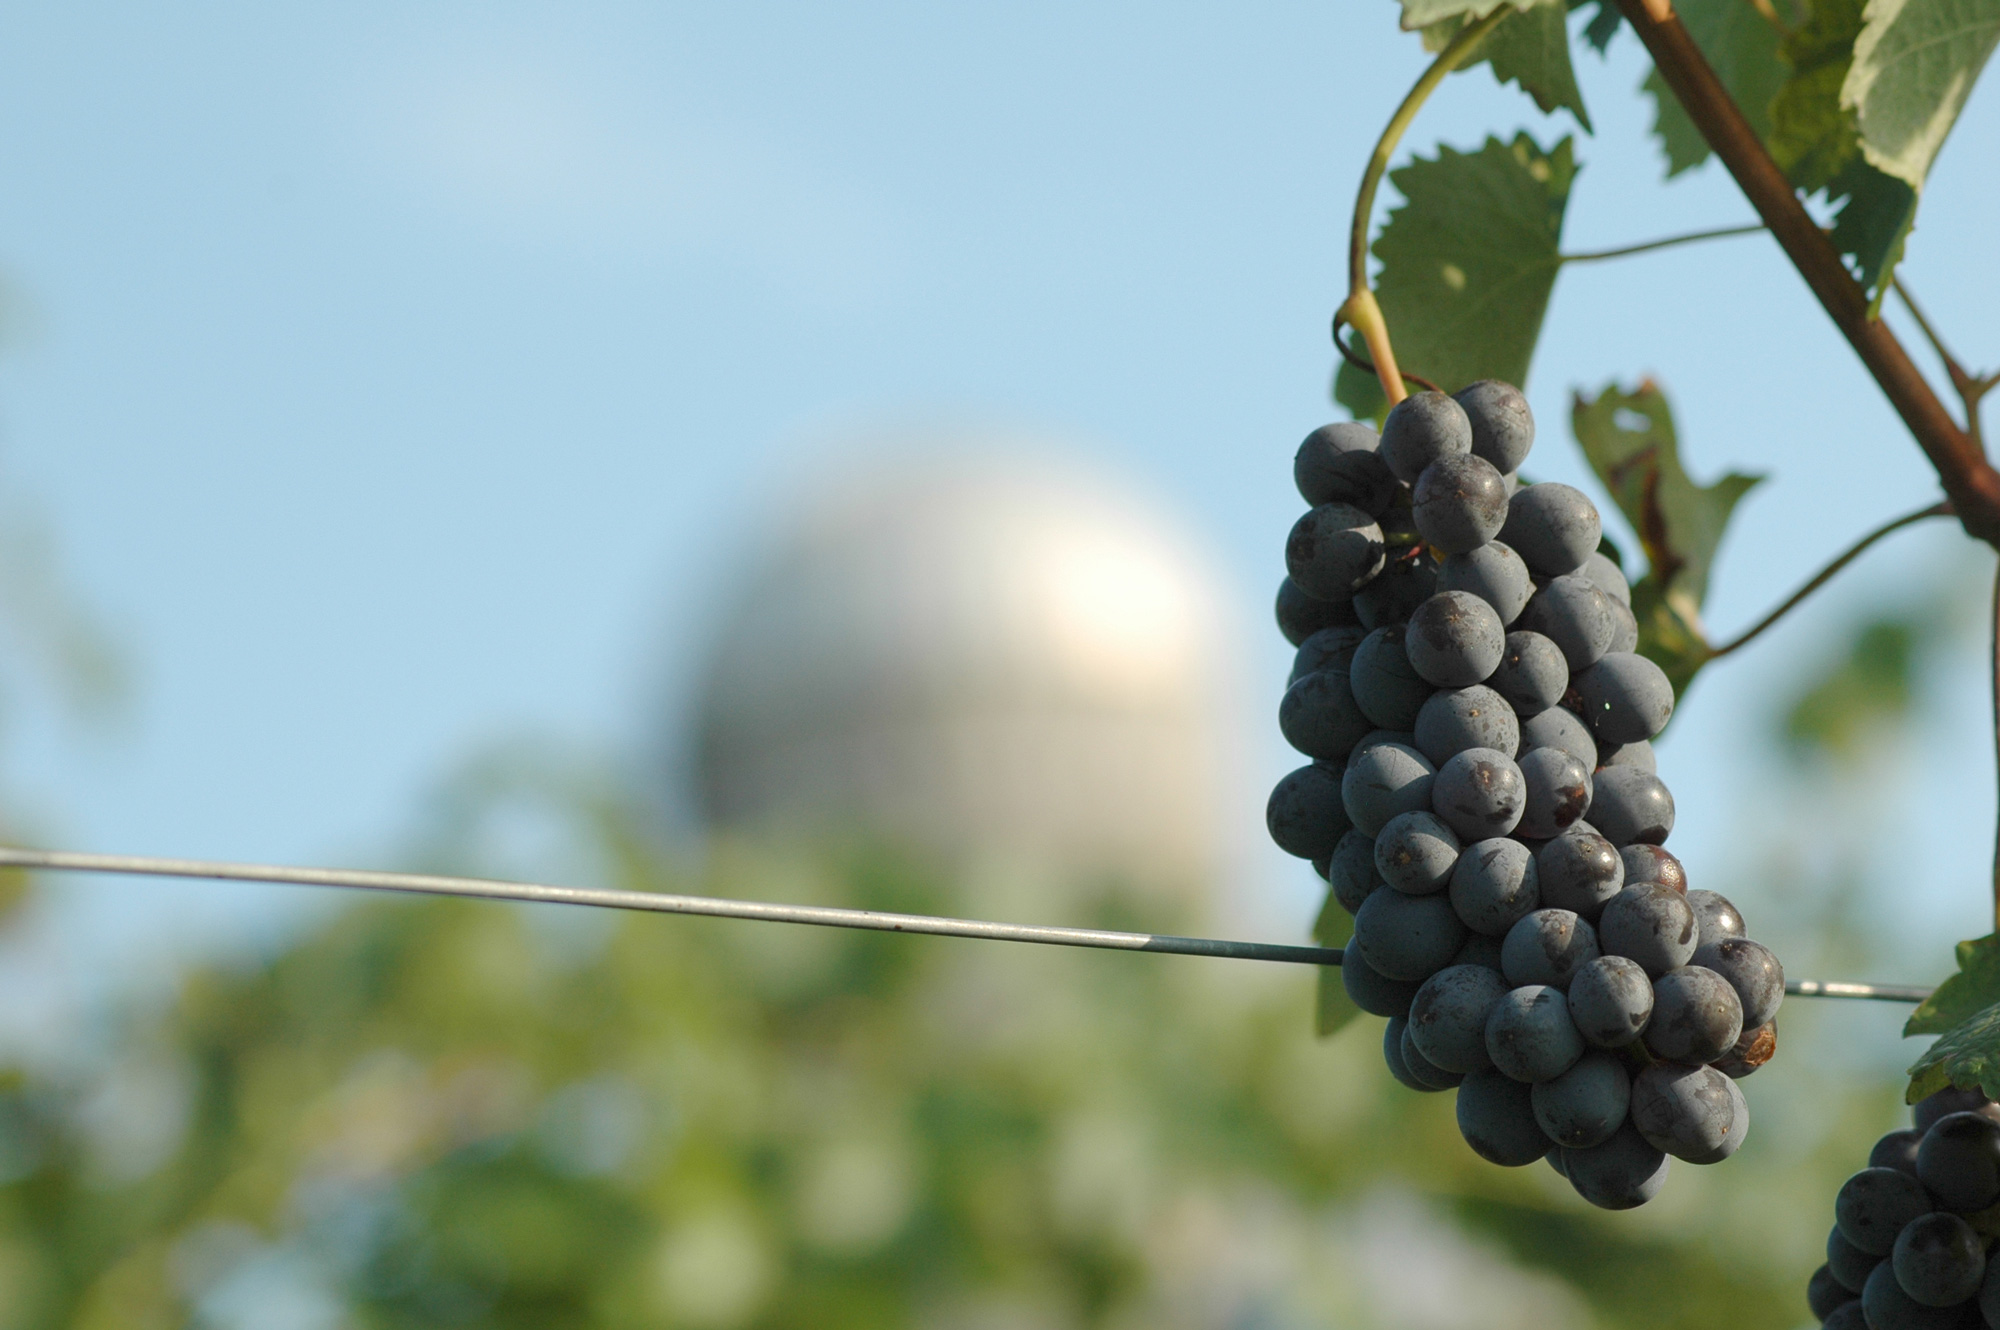 Crow Vineyard & Winery